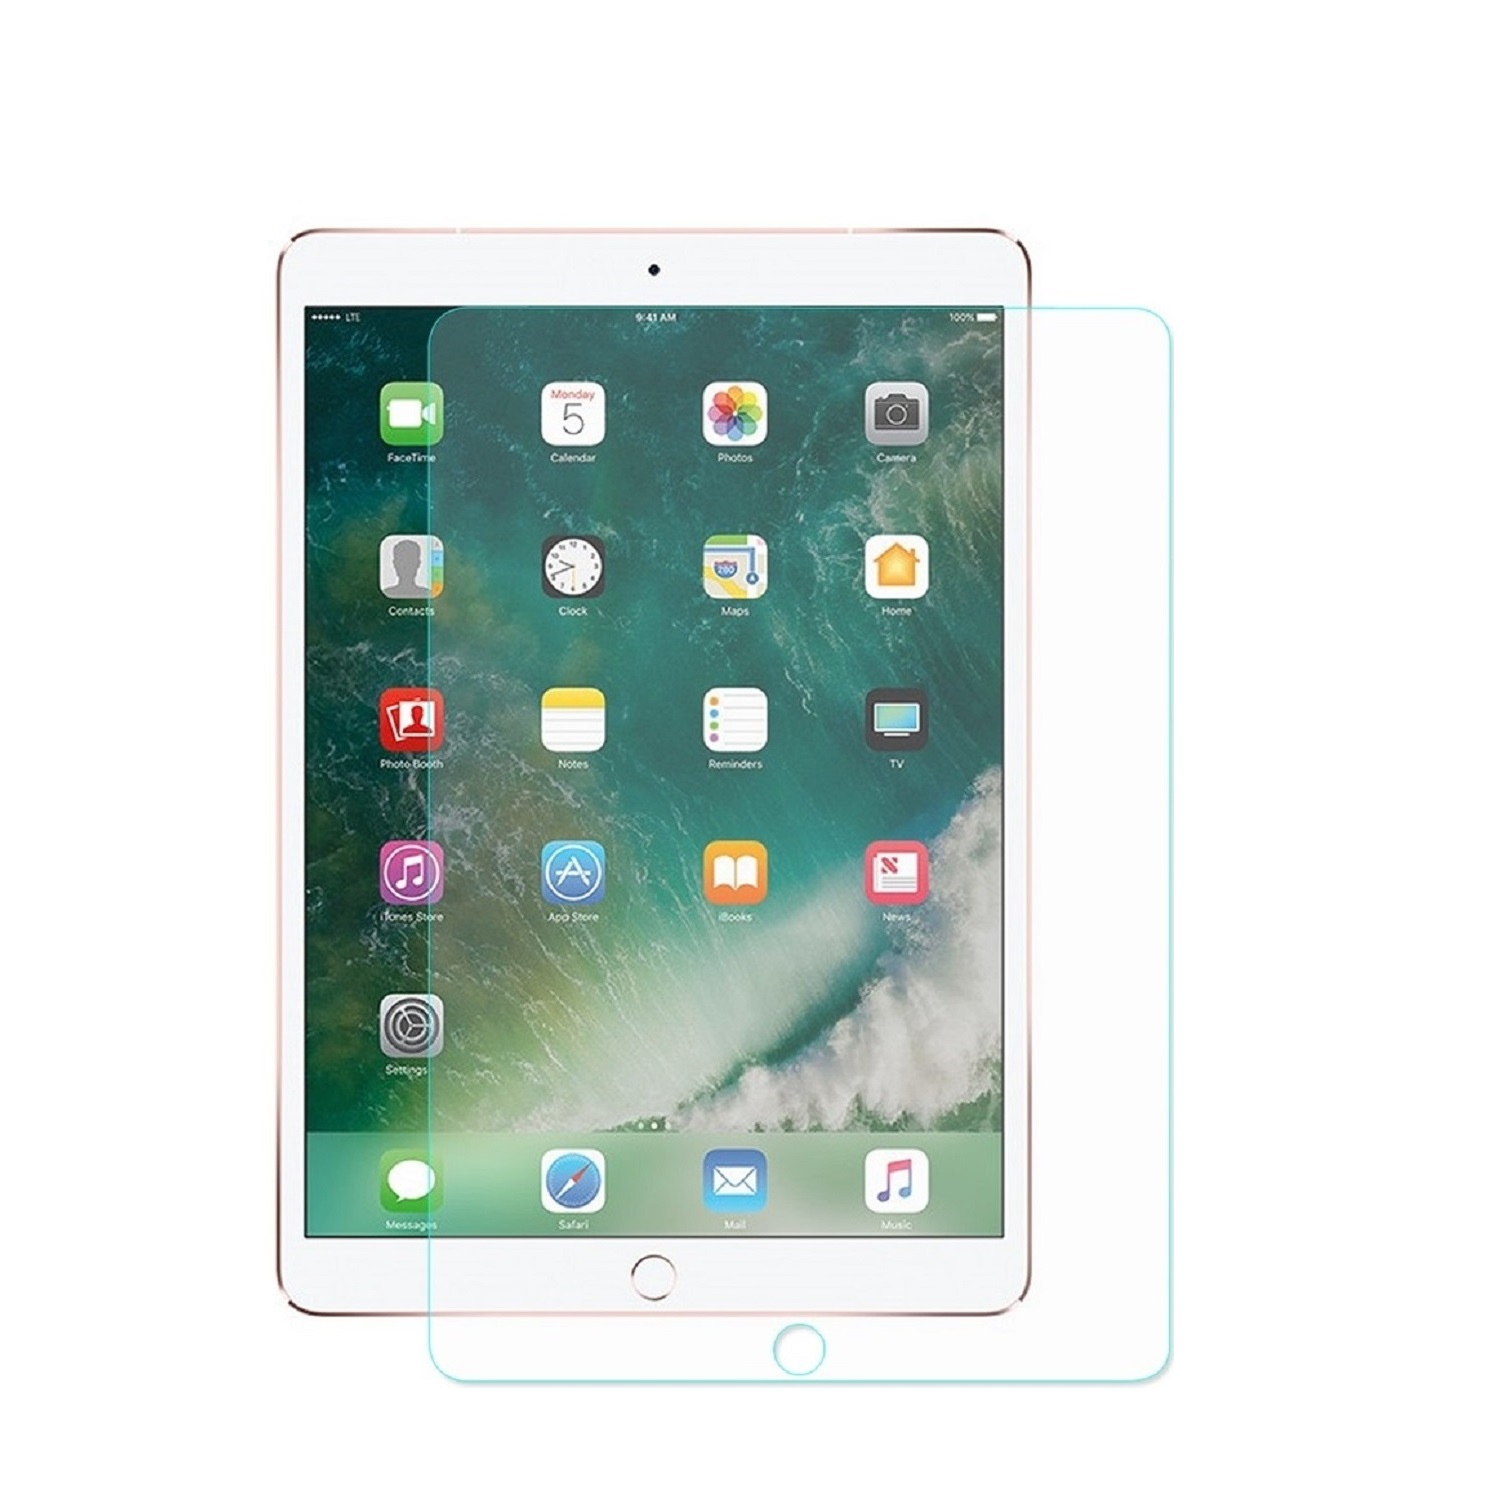 Apple Displayschutzfolie(für HD 4x 10.5) Schutzglas iPad Hartglas KLAR PROTECTORKING Pro 9H